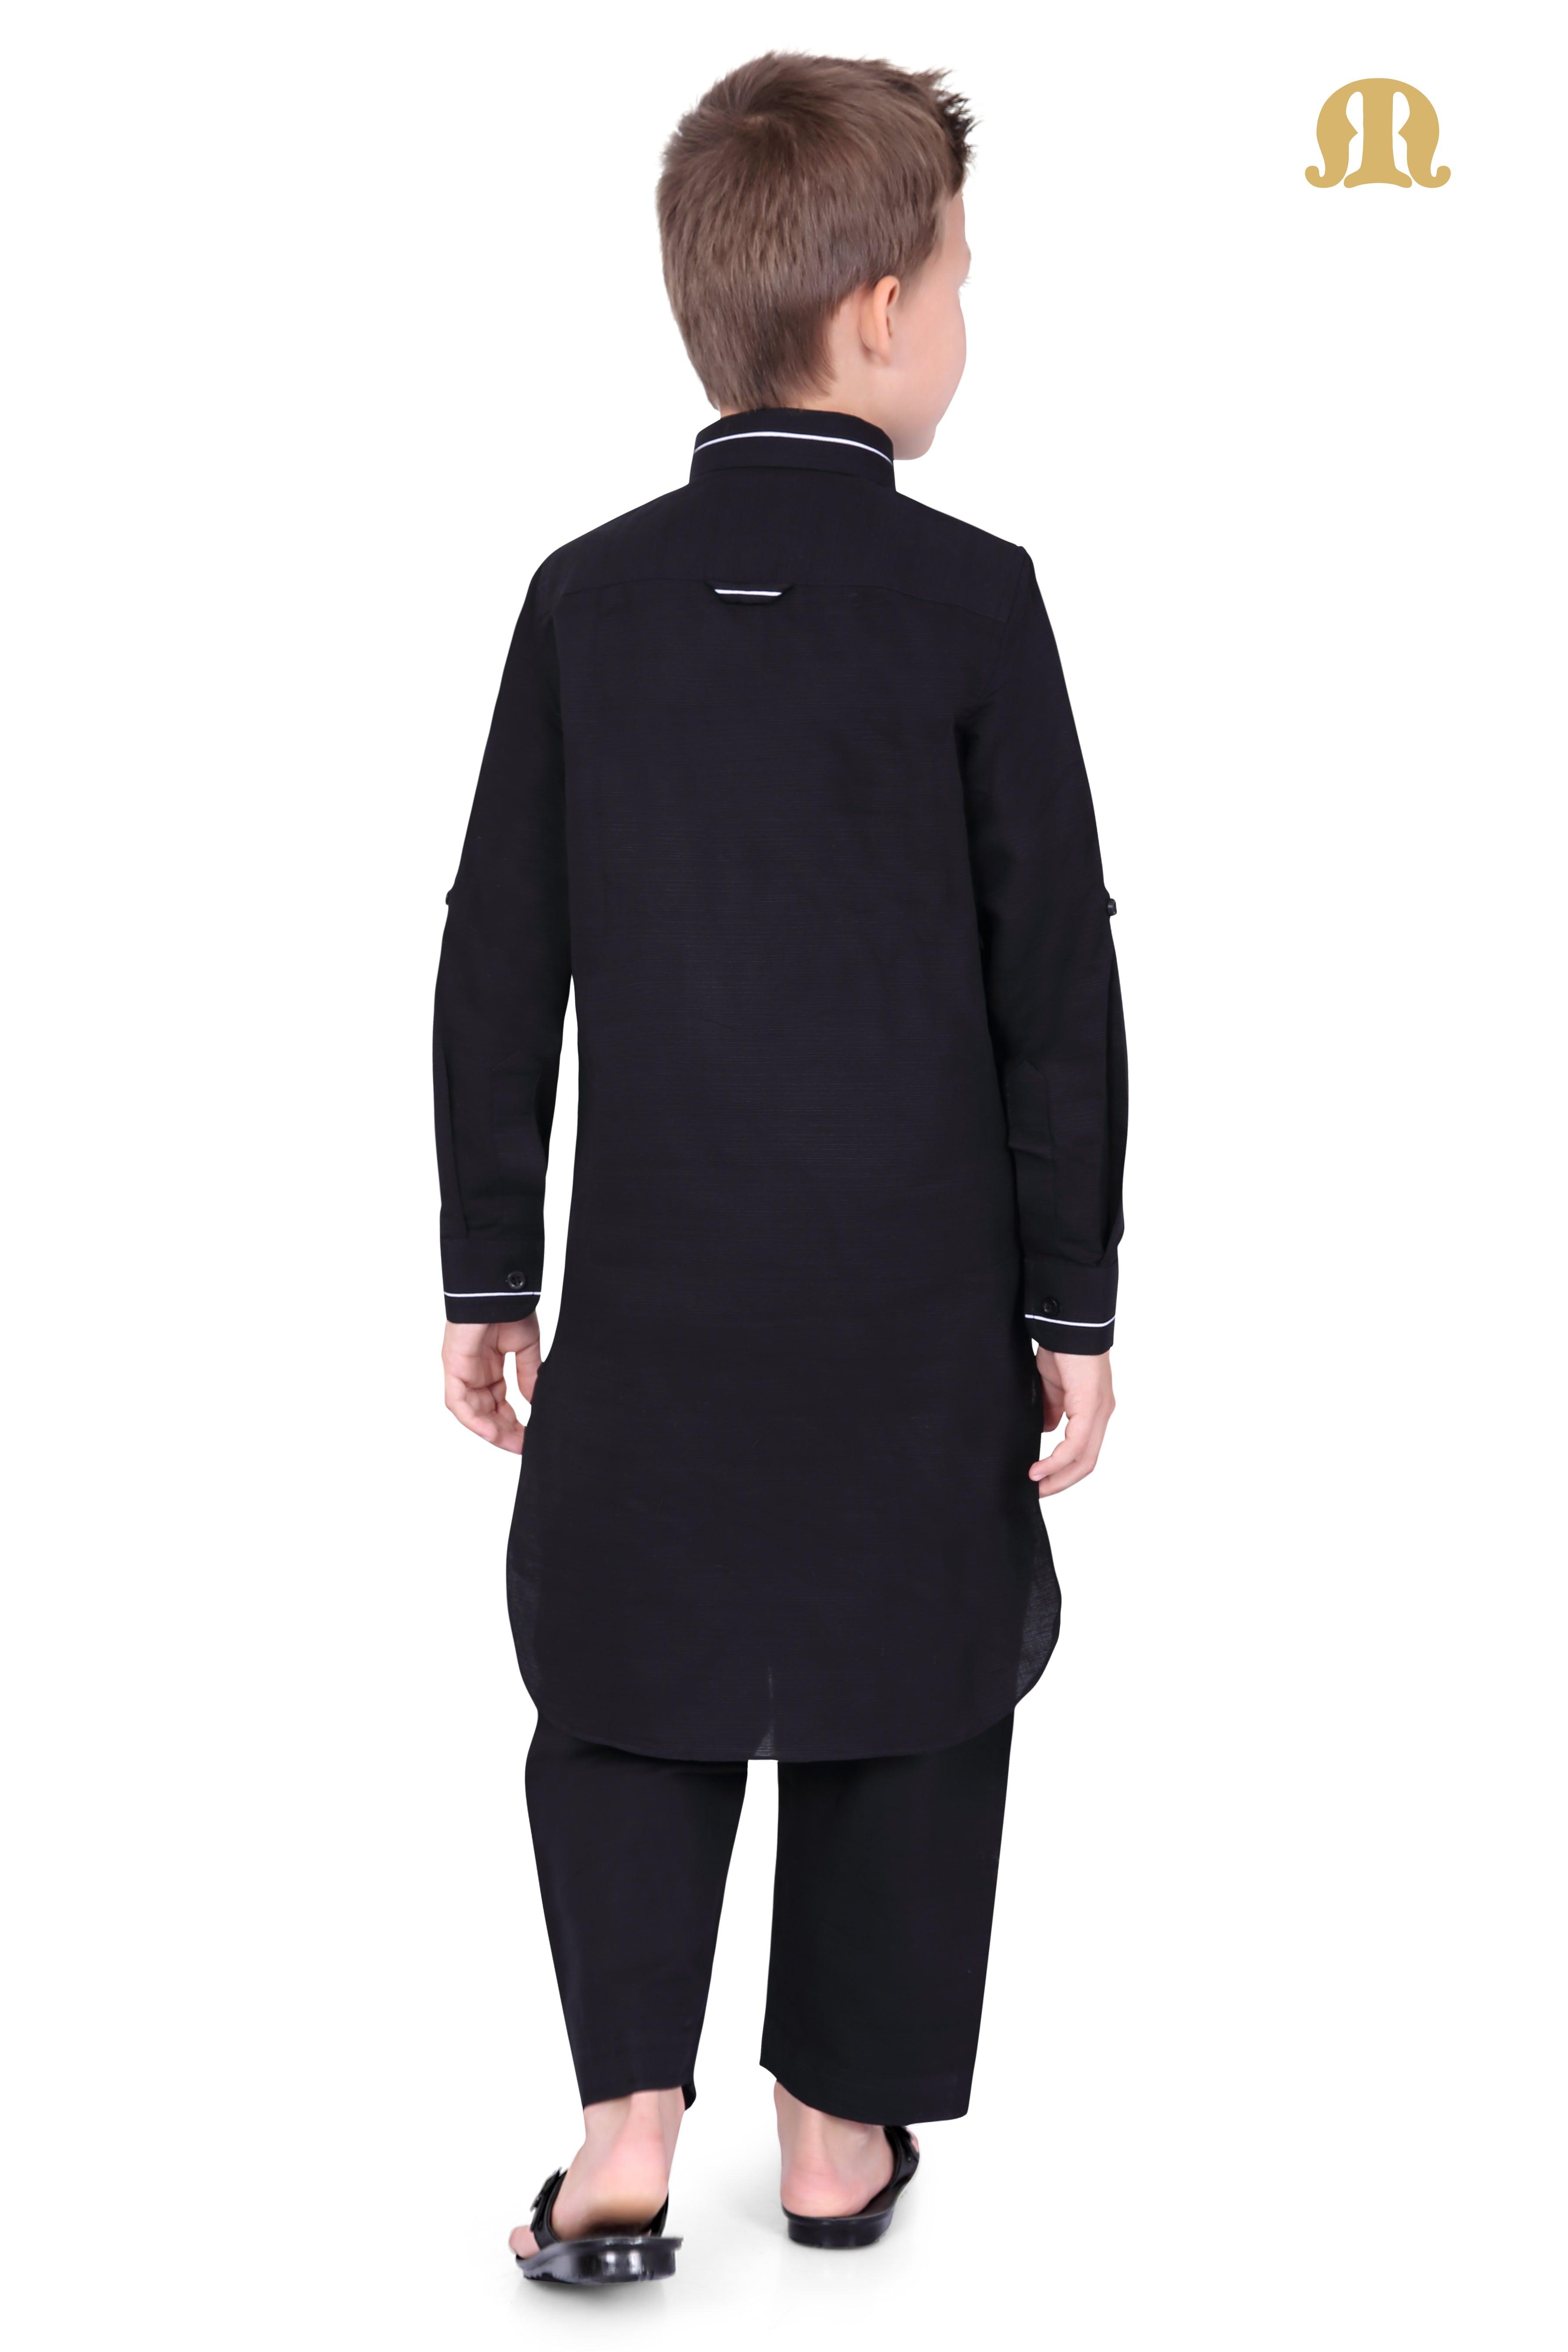 Black Riwaya Pathani Suit for Boys - Mashroo